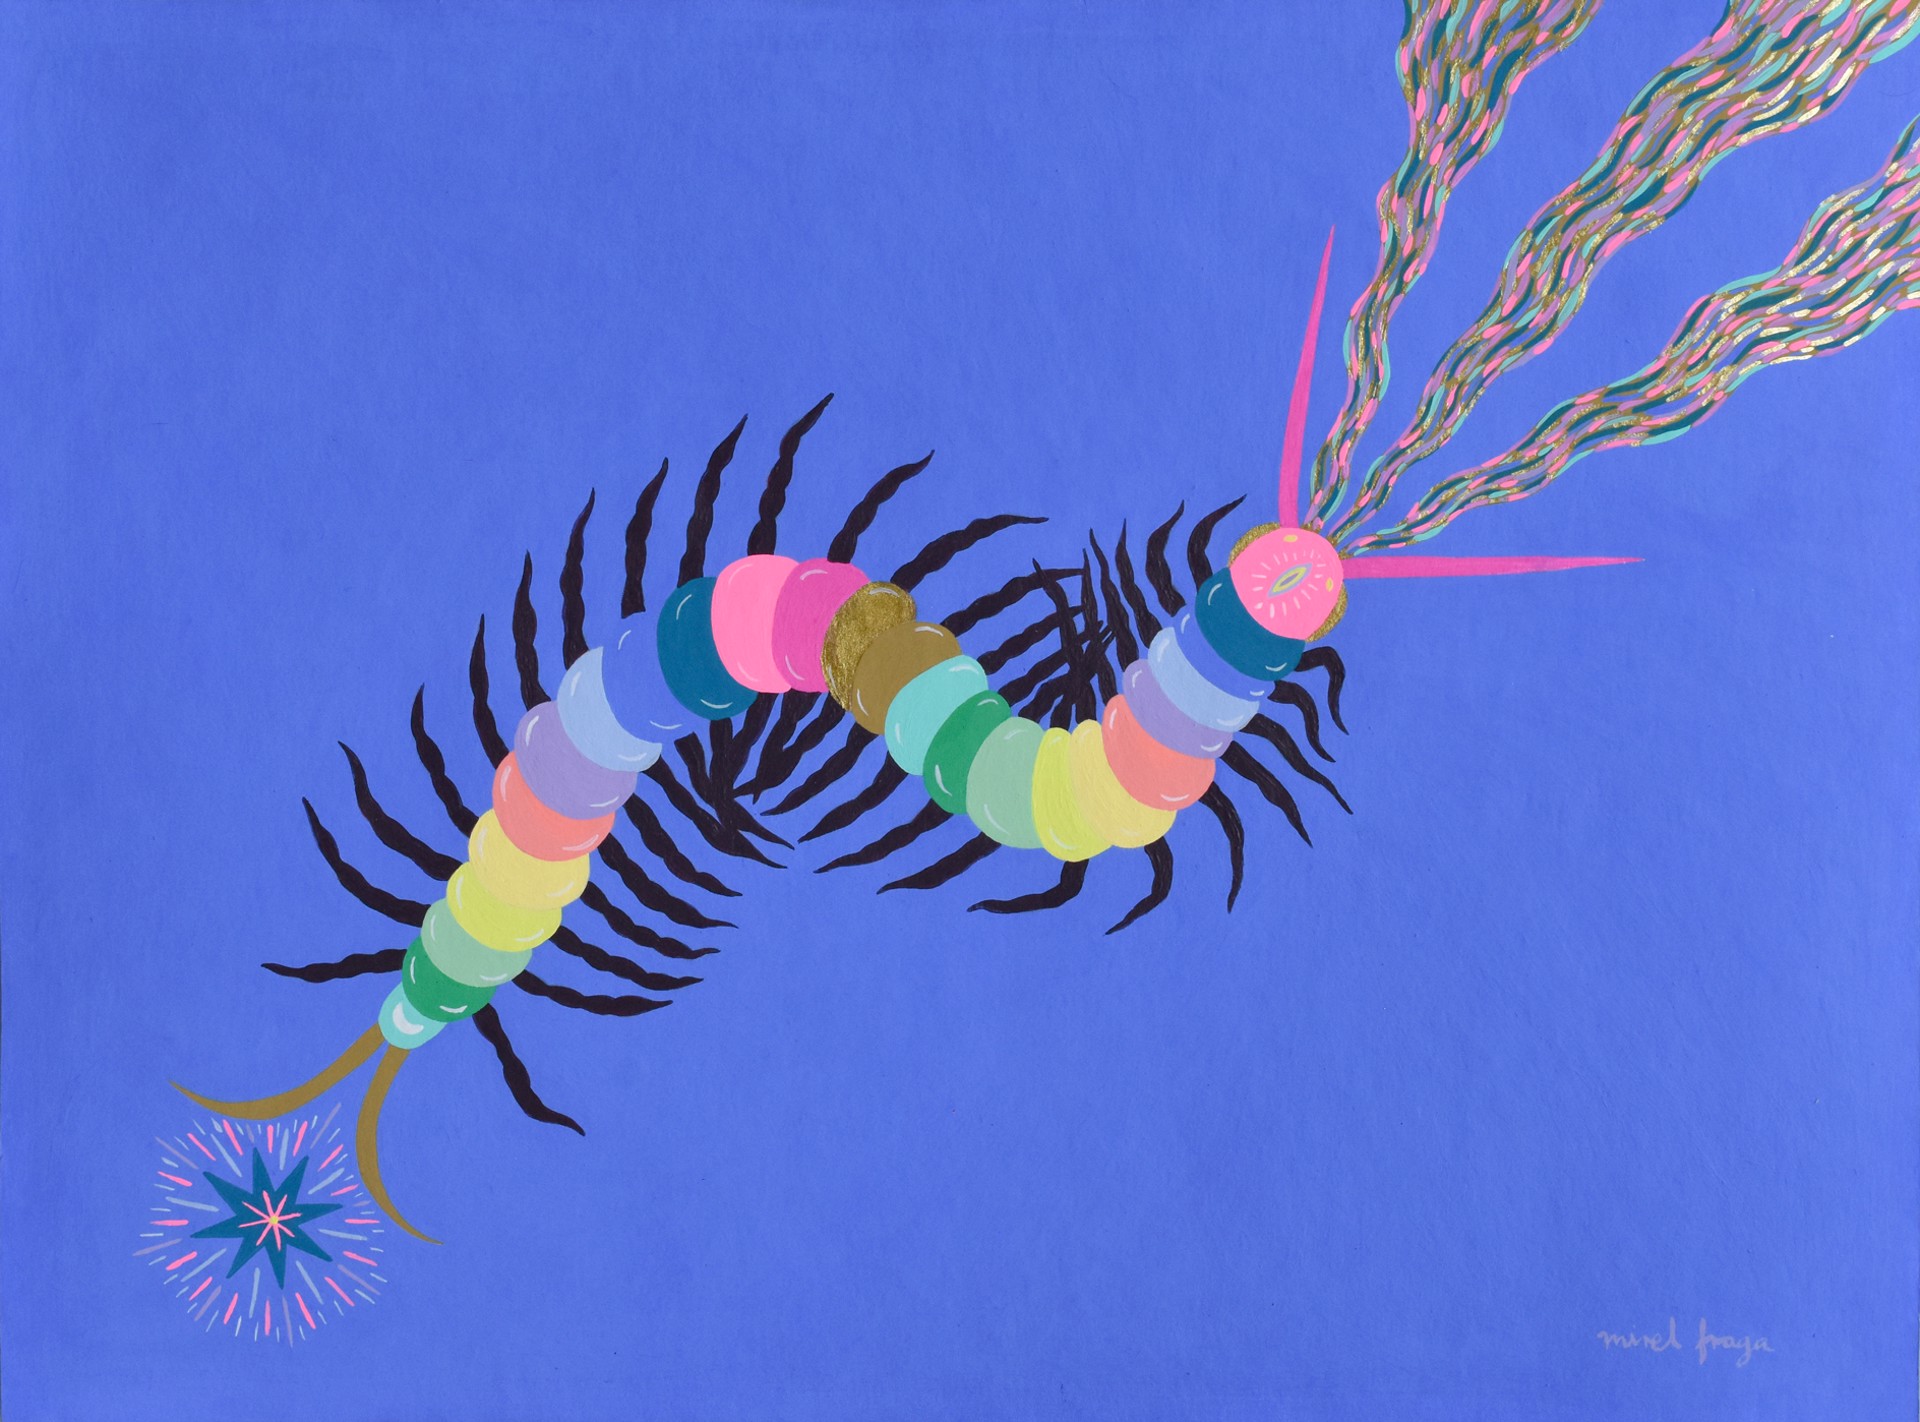 Traveling Centipede by Mirel Fraga